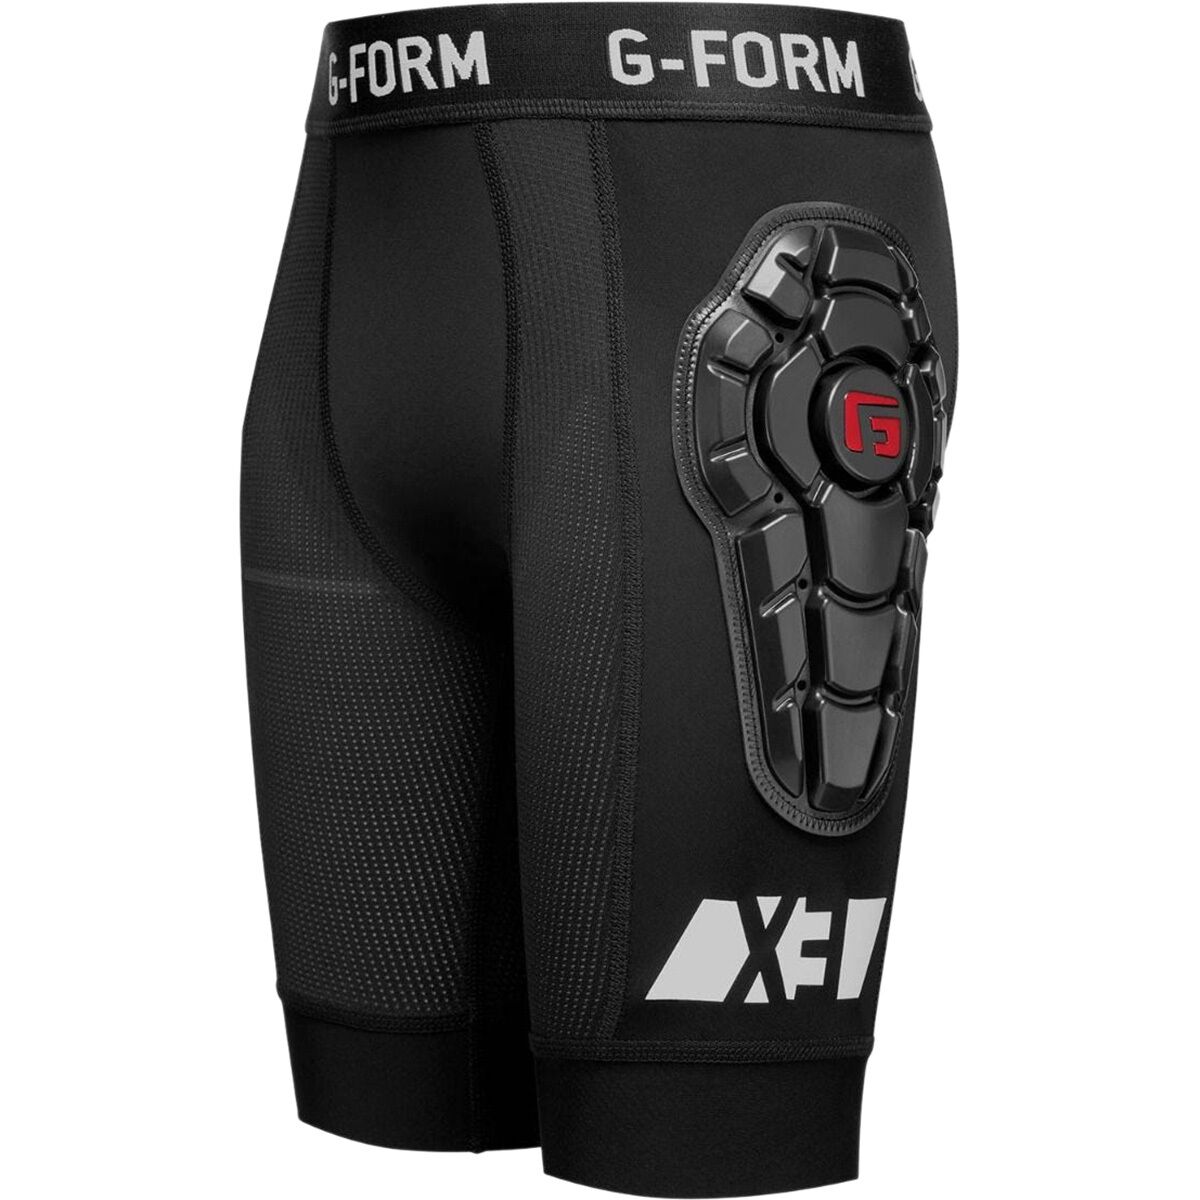 G-Form Pro-X3 Bike Short Liner - Boys' Black, L/XL